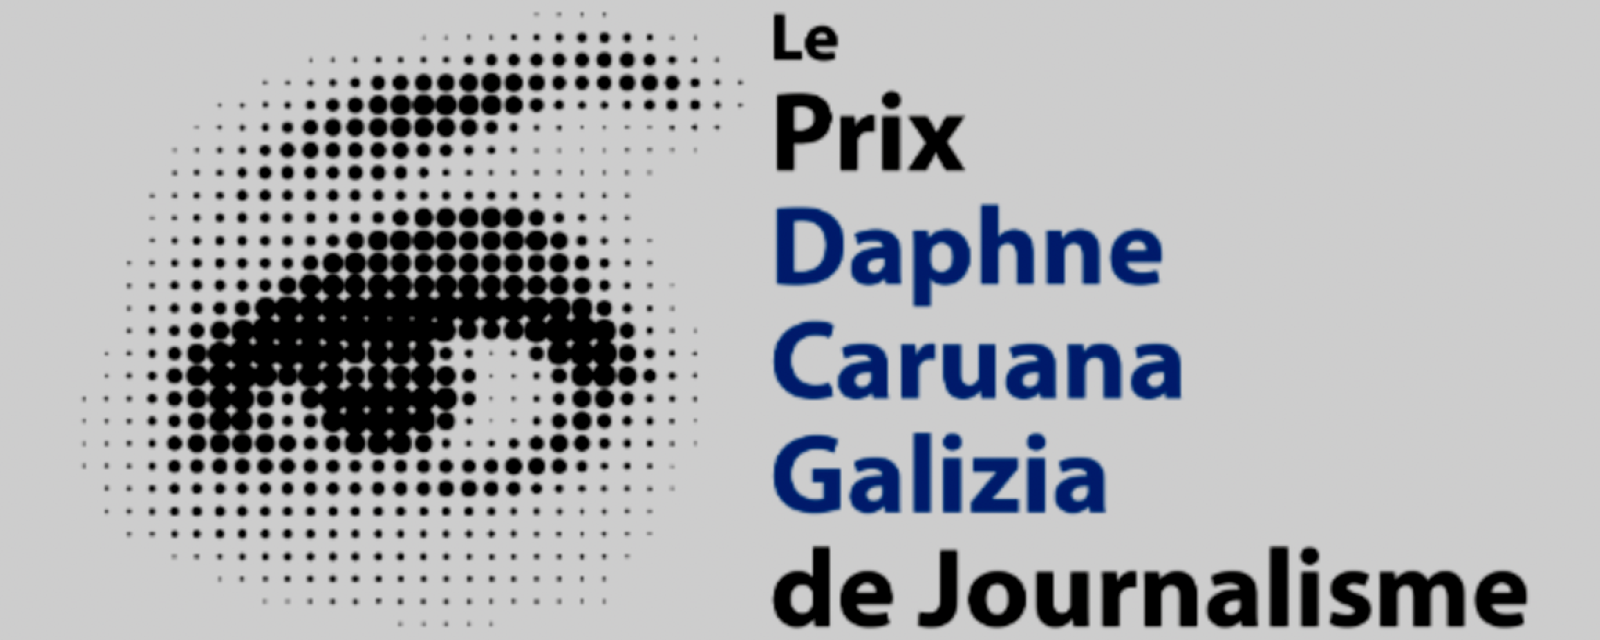 Prix-Daphne-Caruana-Galizia